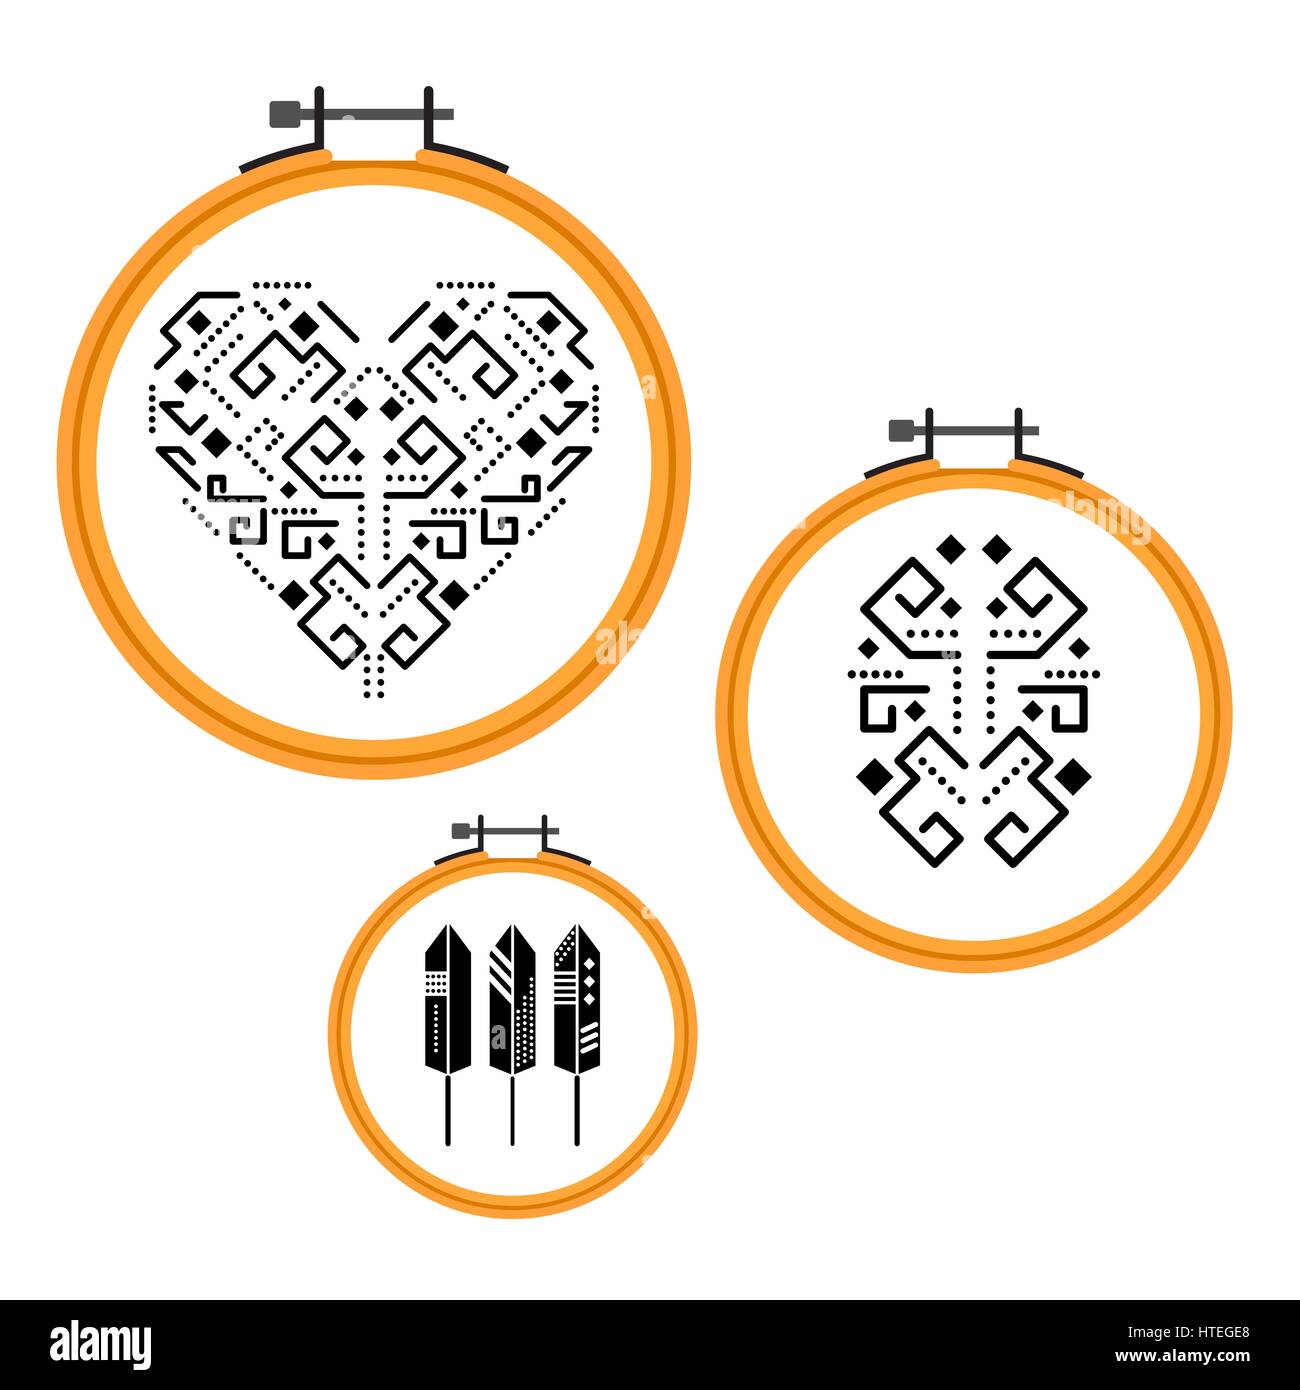 Needlework design on embroidery hoops. Stock Vector